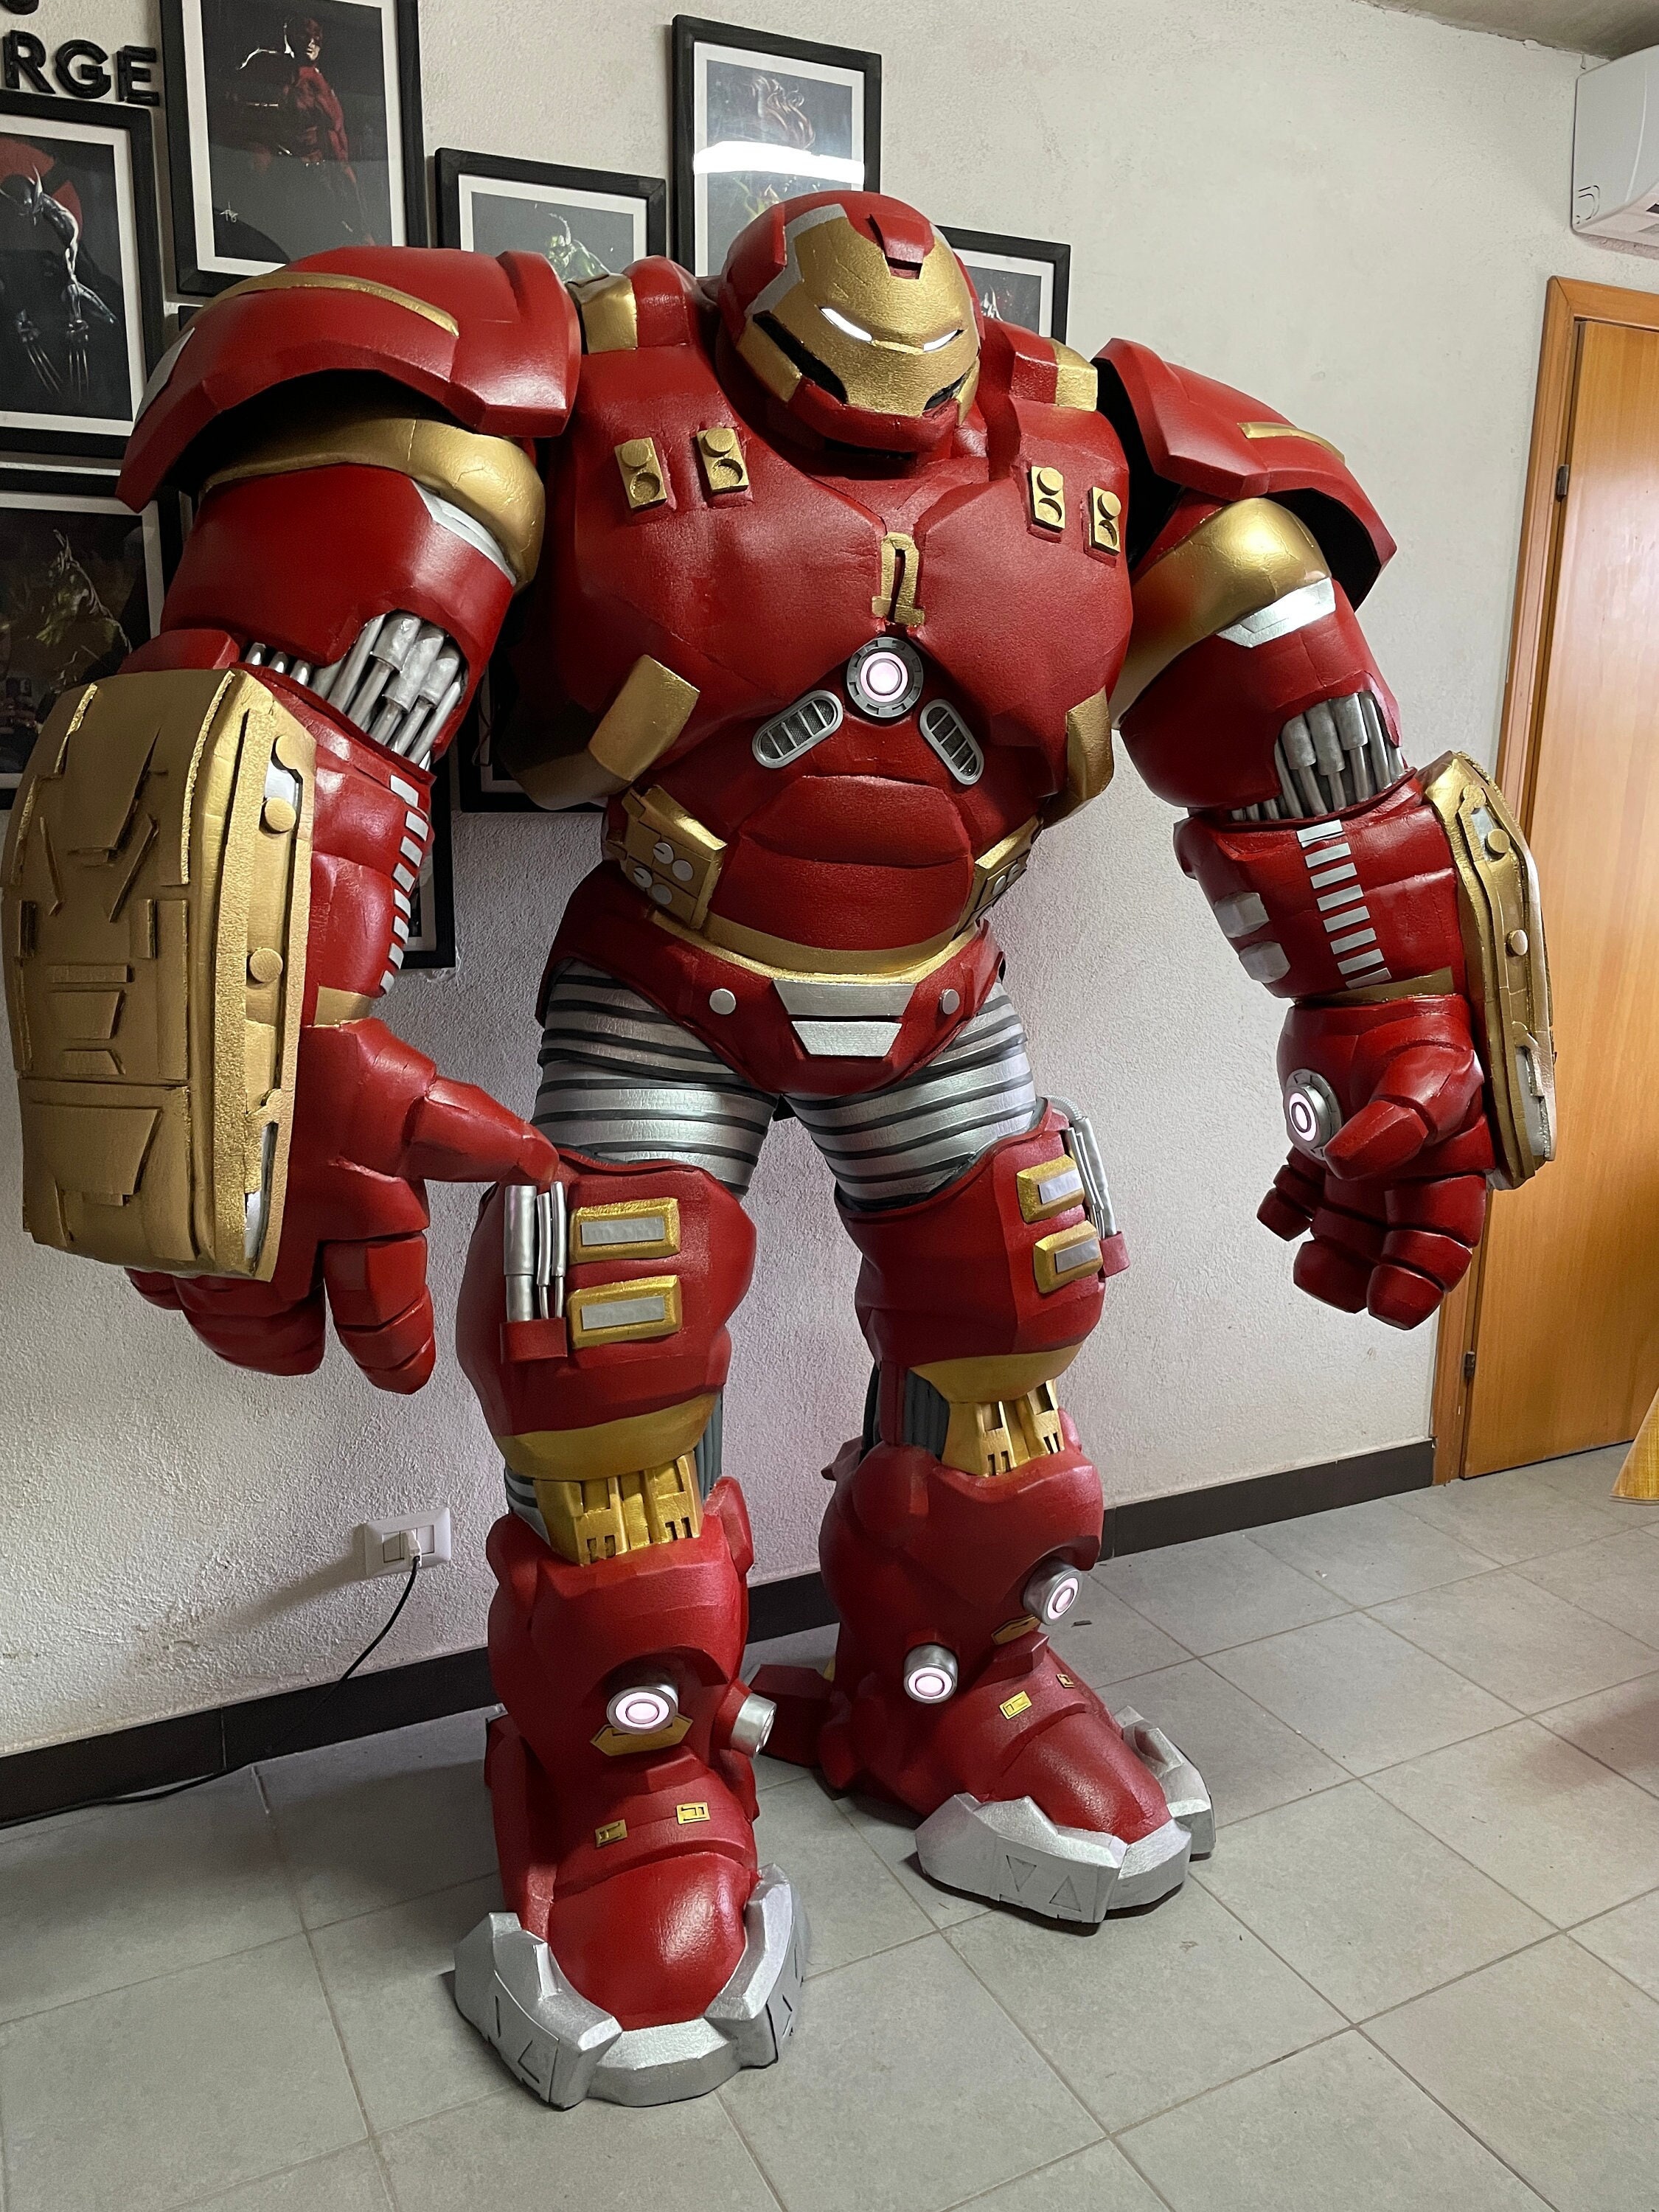 Iron Man 3 - Official Trailer #2 (HD) : Iron Legion, Hulk Buster Armor -  YouTube